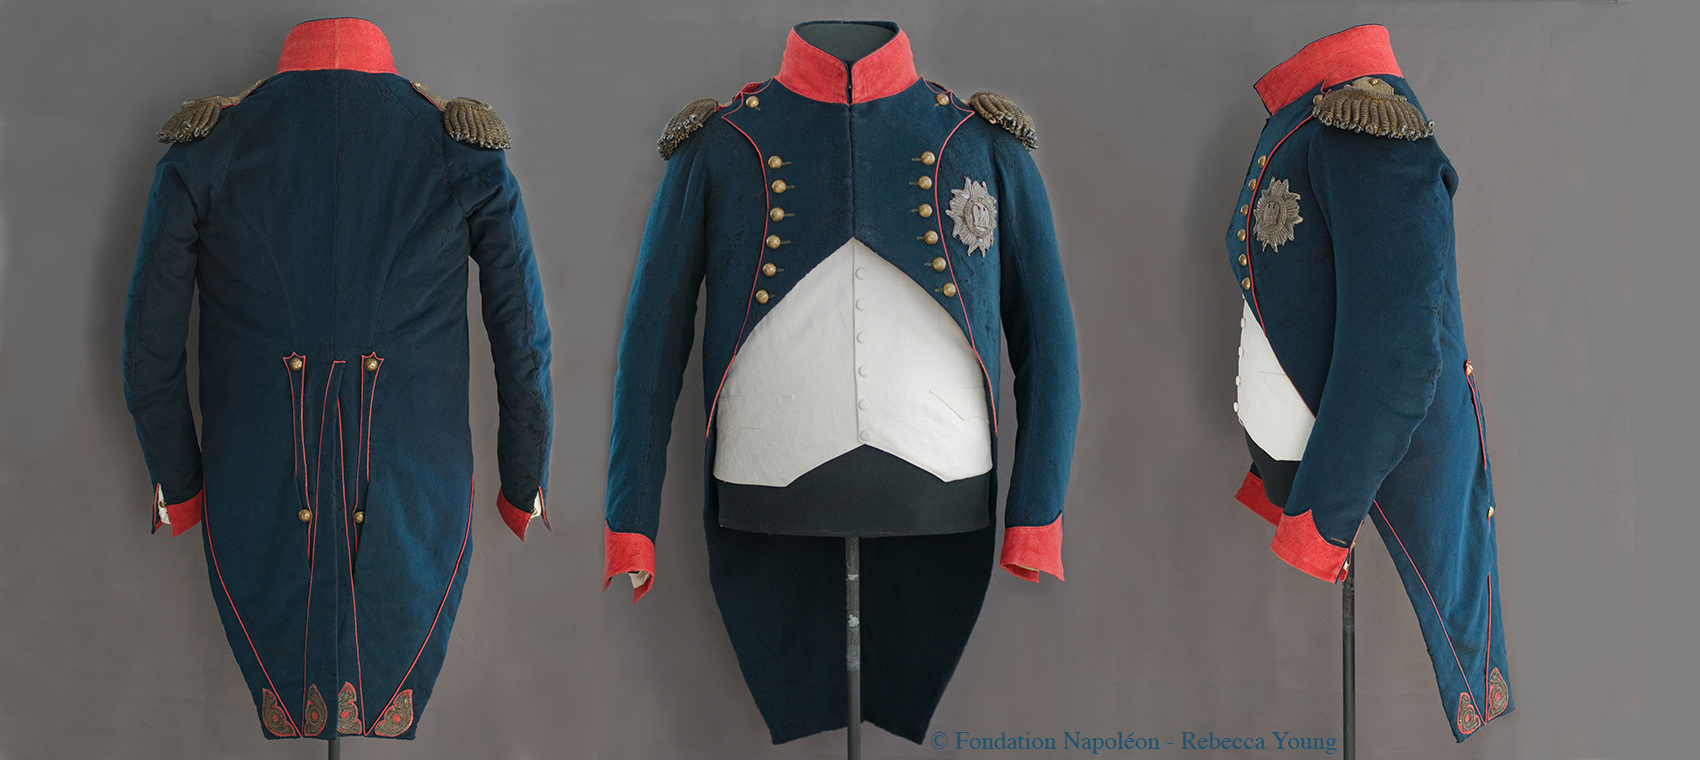 Униформа наполеона. Мундир Наполеона Бонапарта. Наполеон Бонапарт сюртук. Мундир Кутузова 1812 года. Одежда Наполеона Бонапарта.